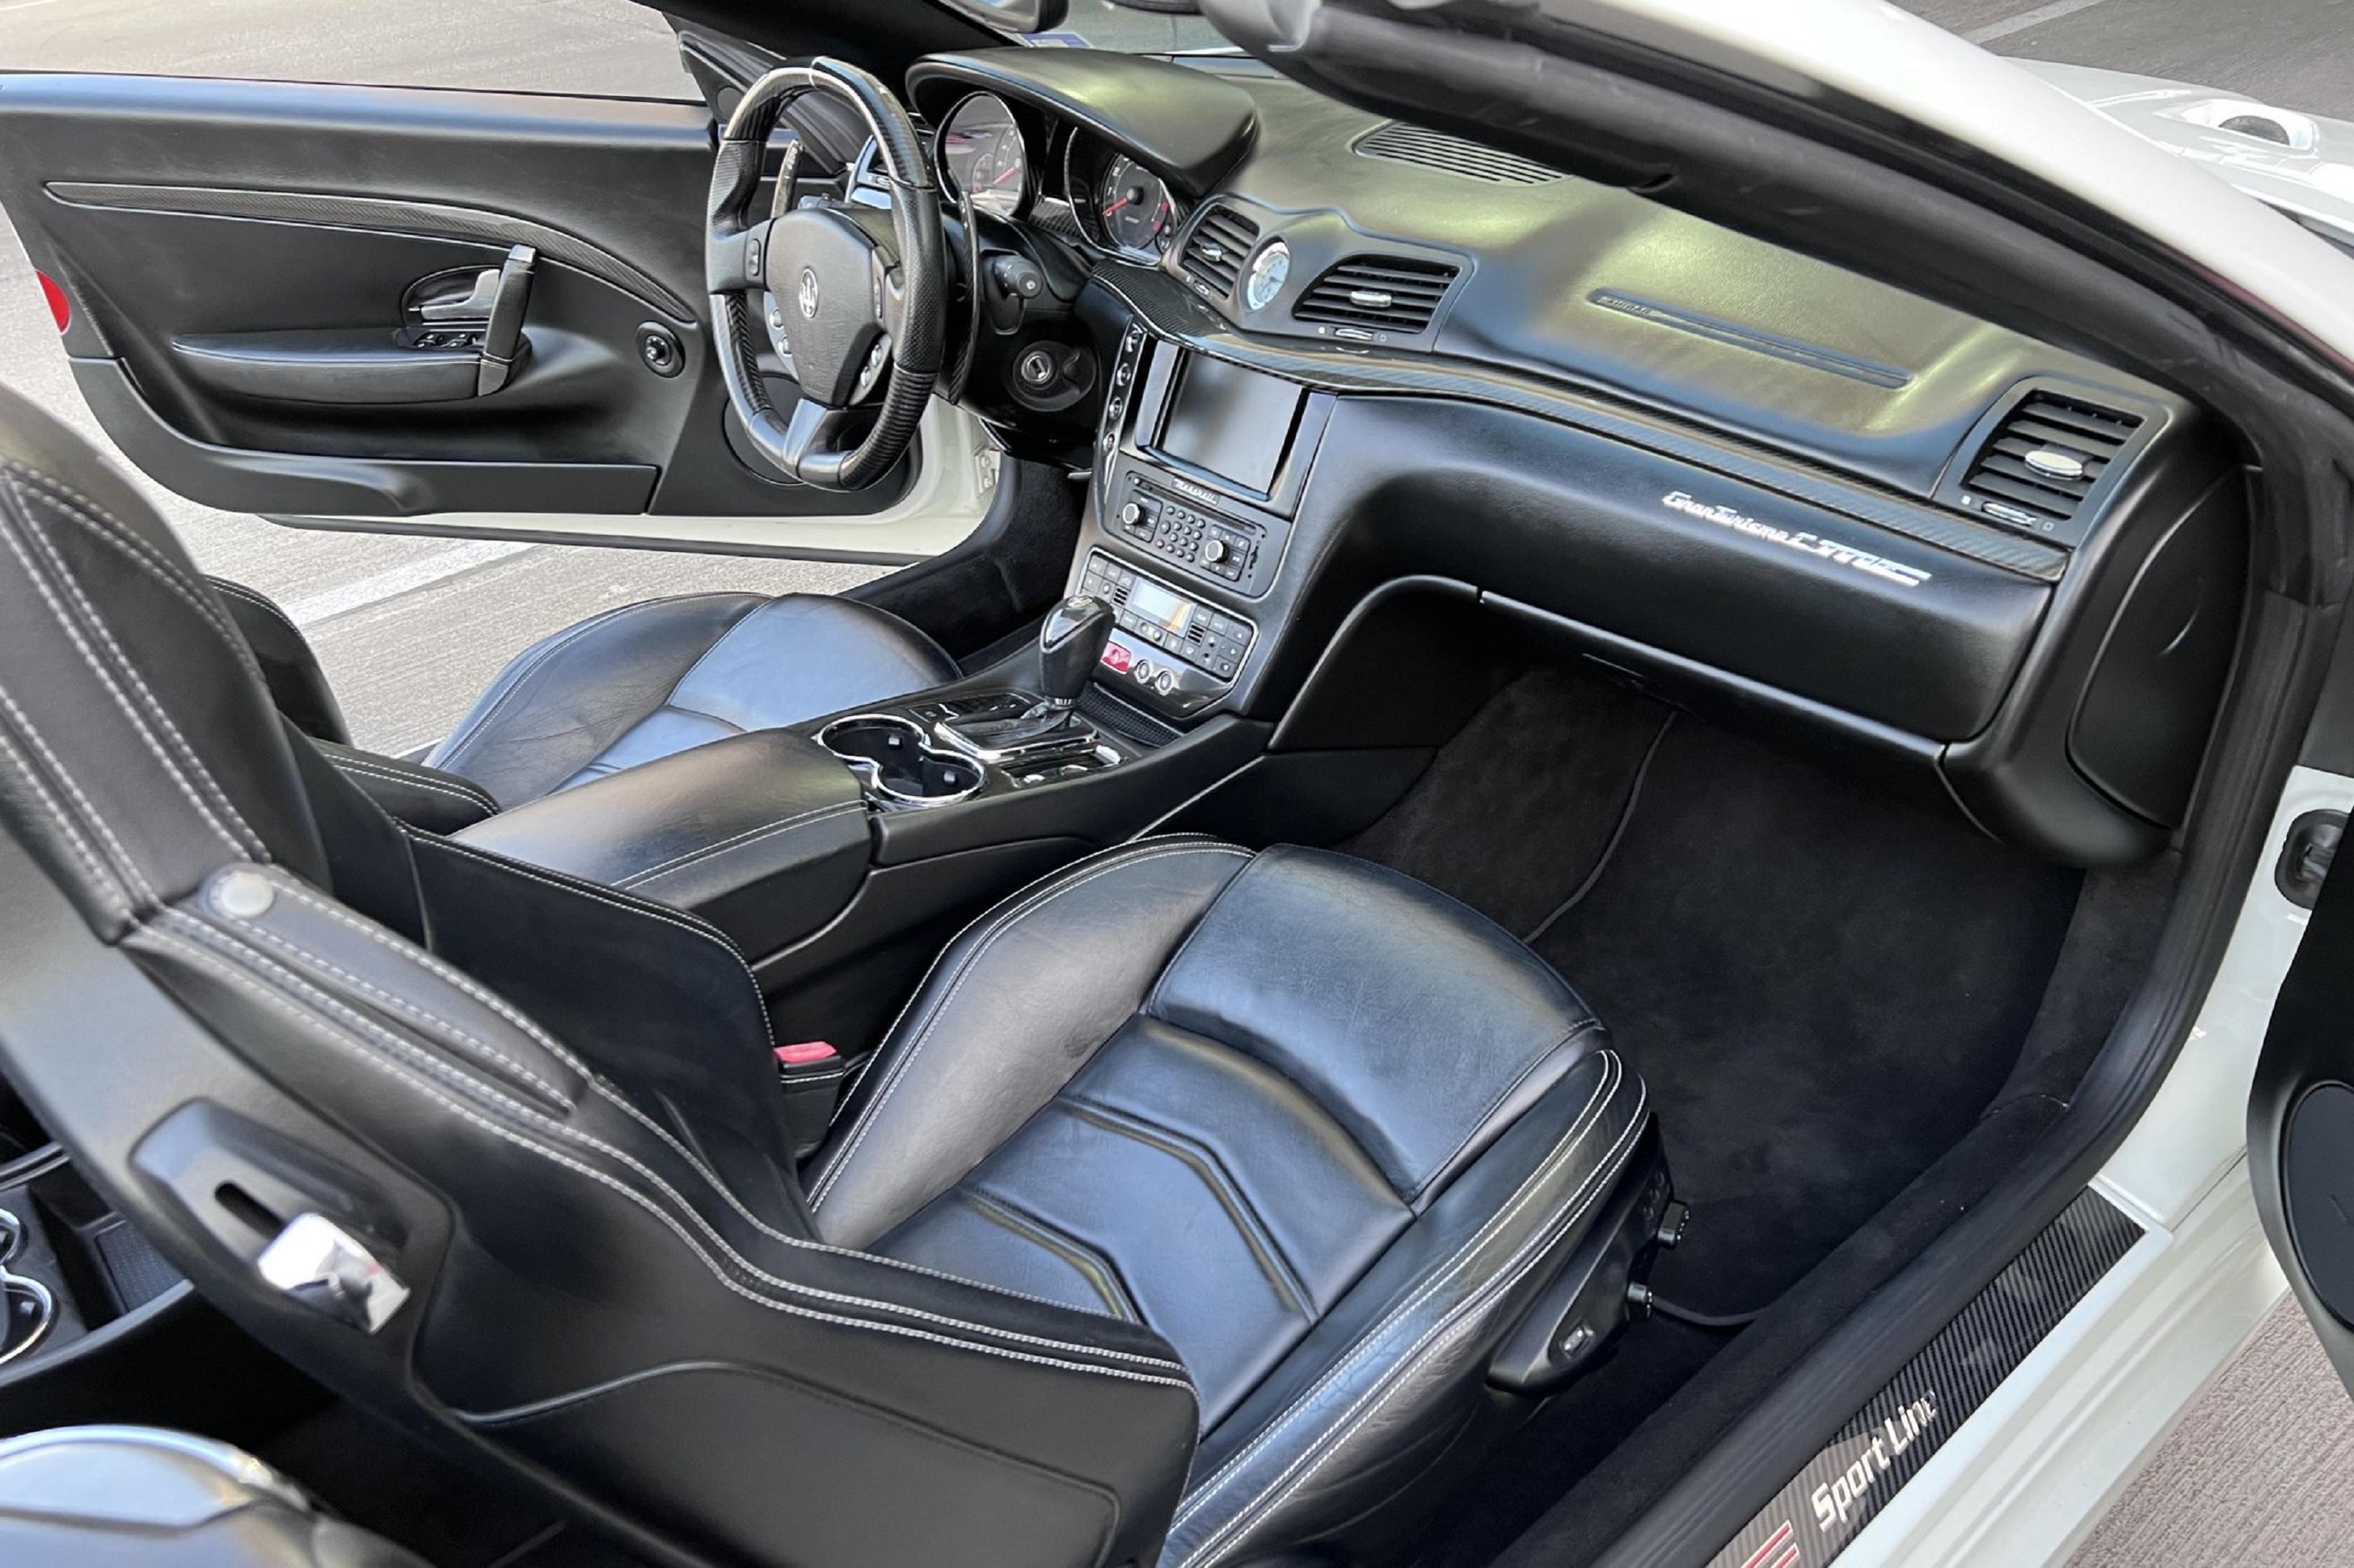 The black leather seats and carbon fiber trimmed black dashboard of a white 2013 Maserati GranTurismo MC Convertible